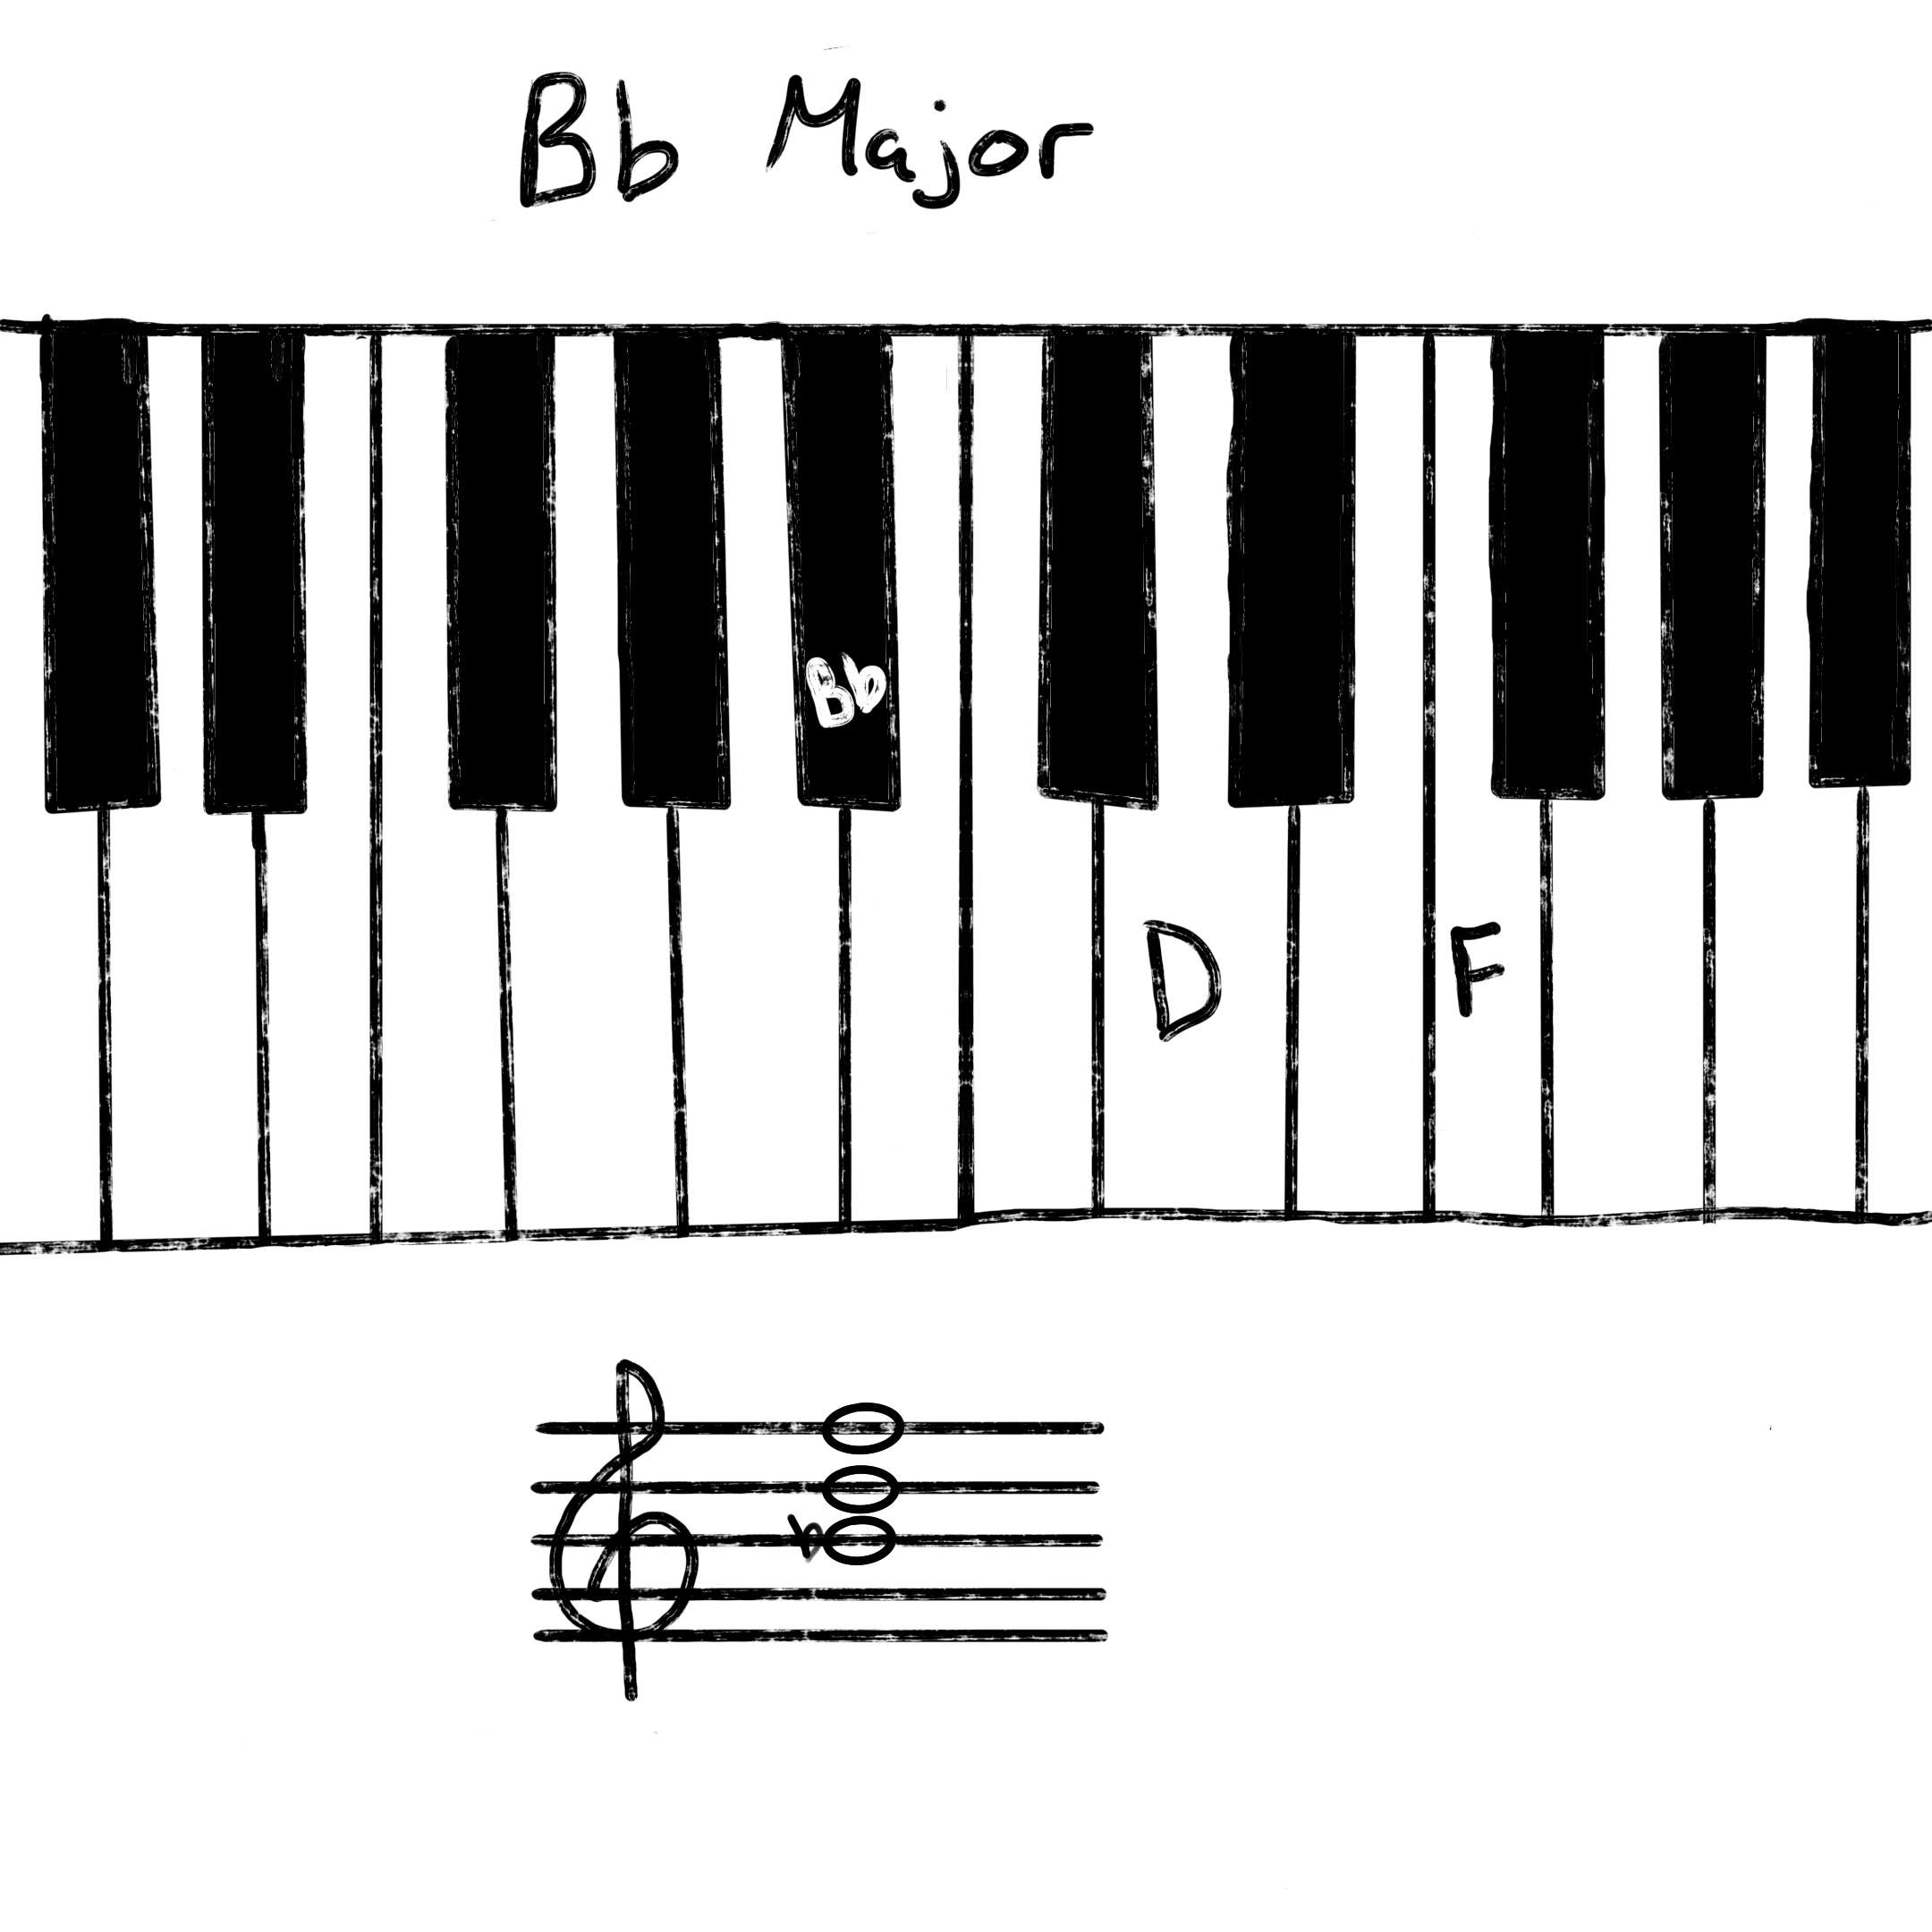 Bb major chord